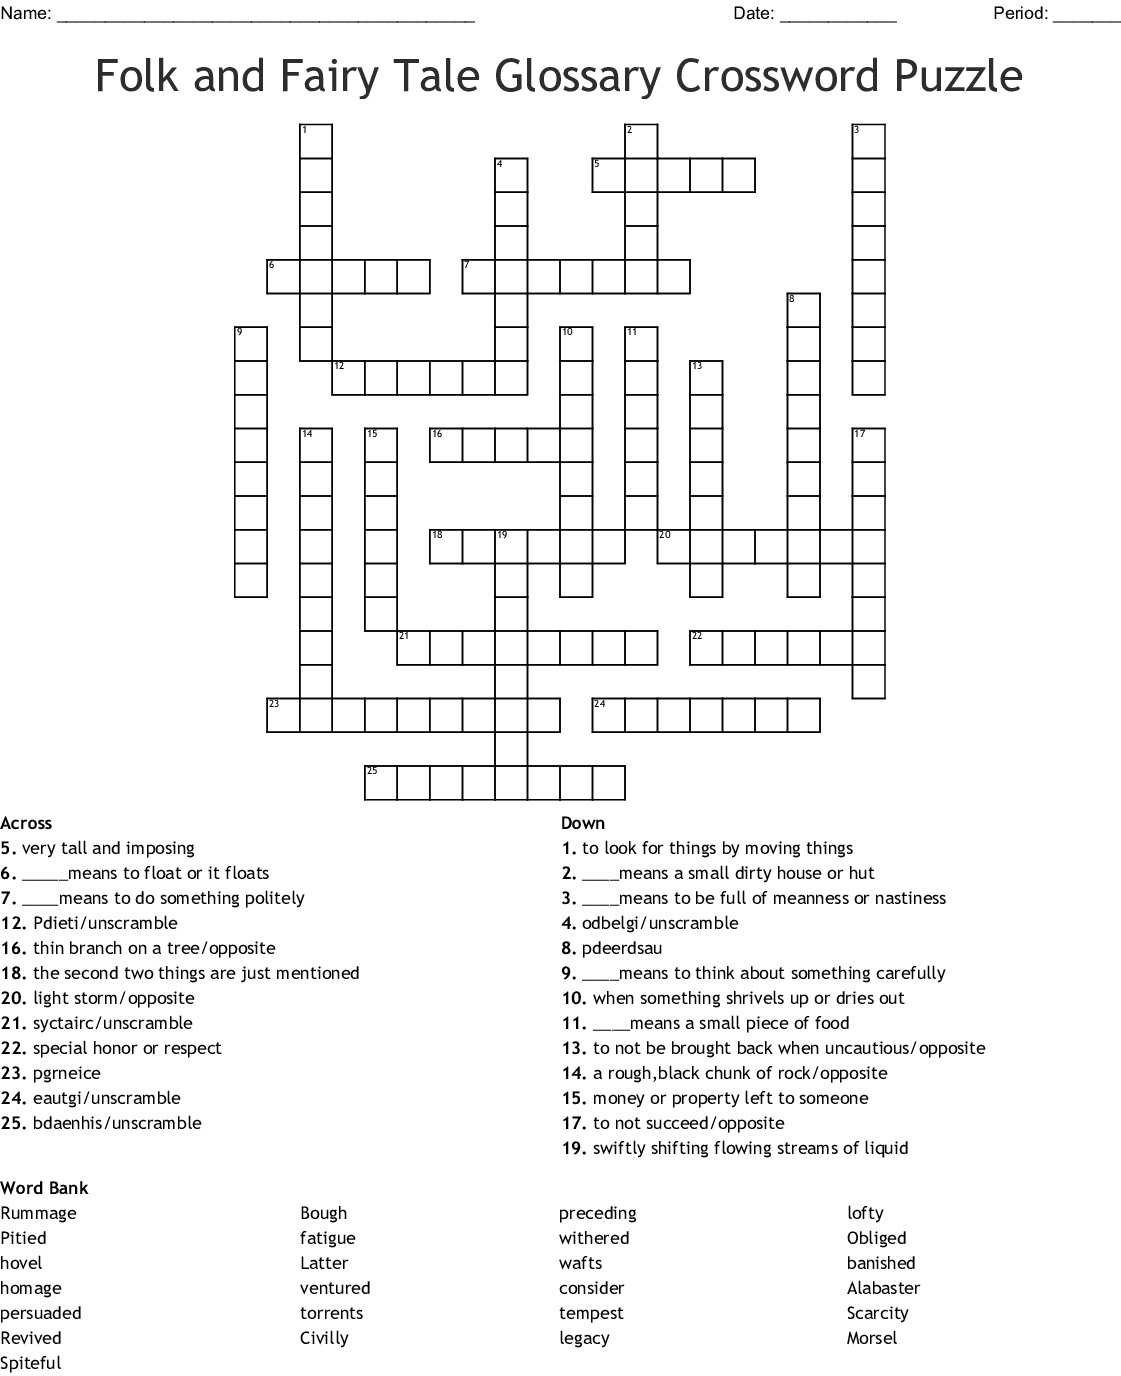 Fairy Tale Crossword Puzzle Printable FreePrintableTM com